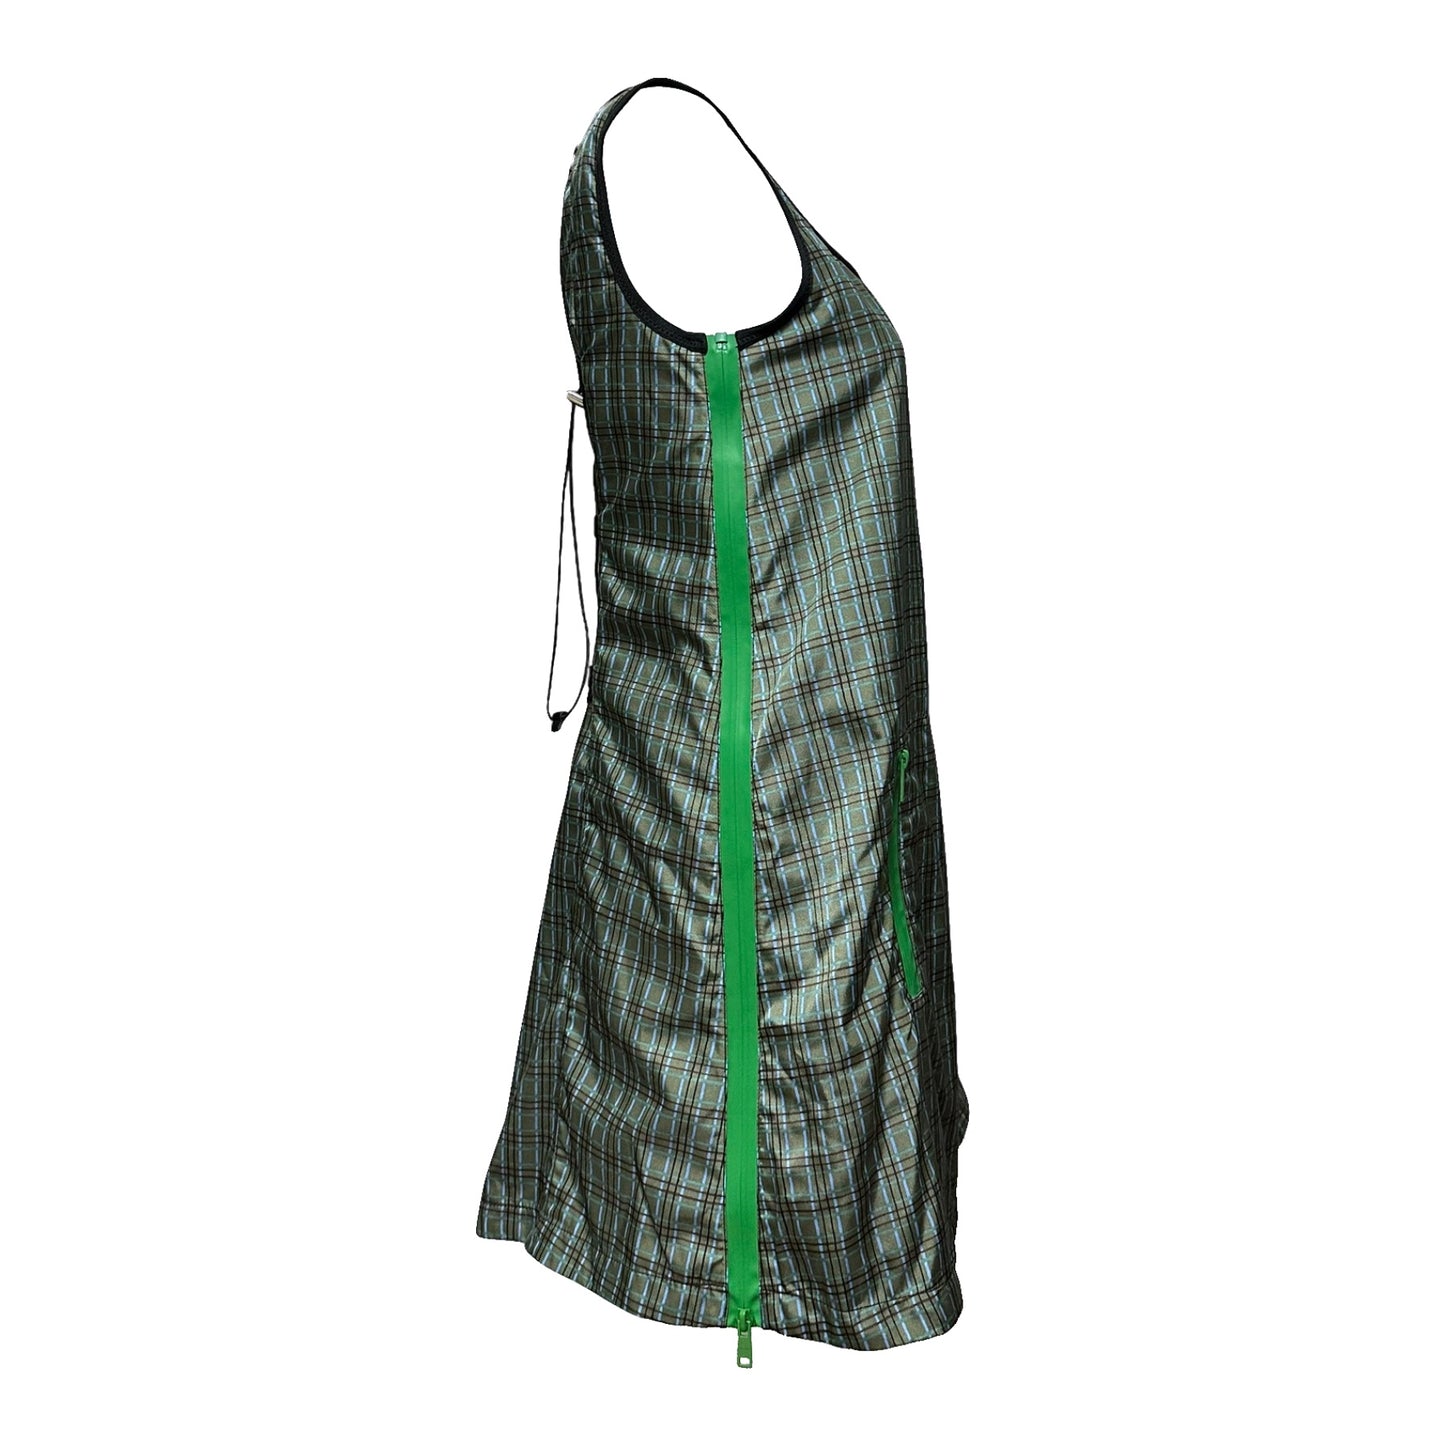 PRADA Nylon Acqua Checkered Laced Up Midi Dress